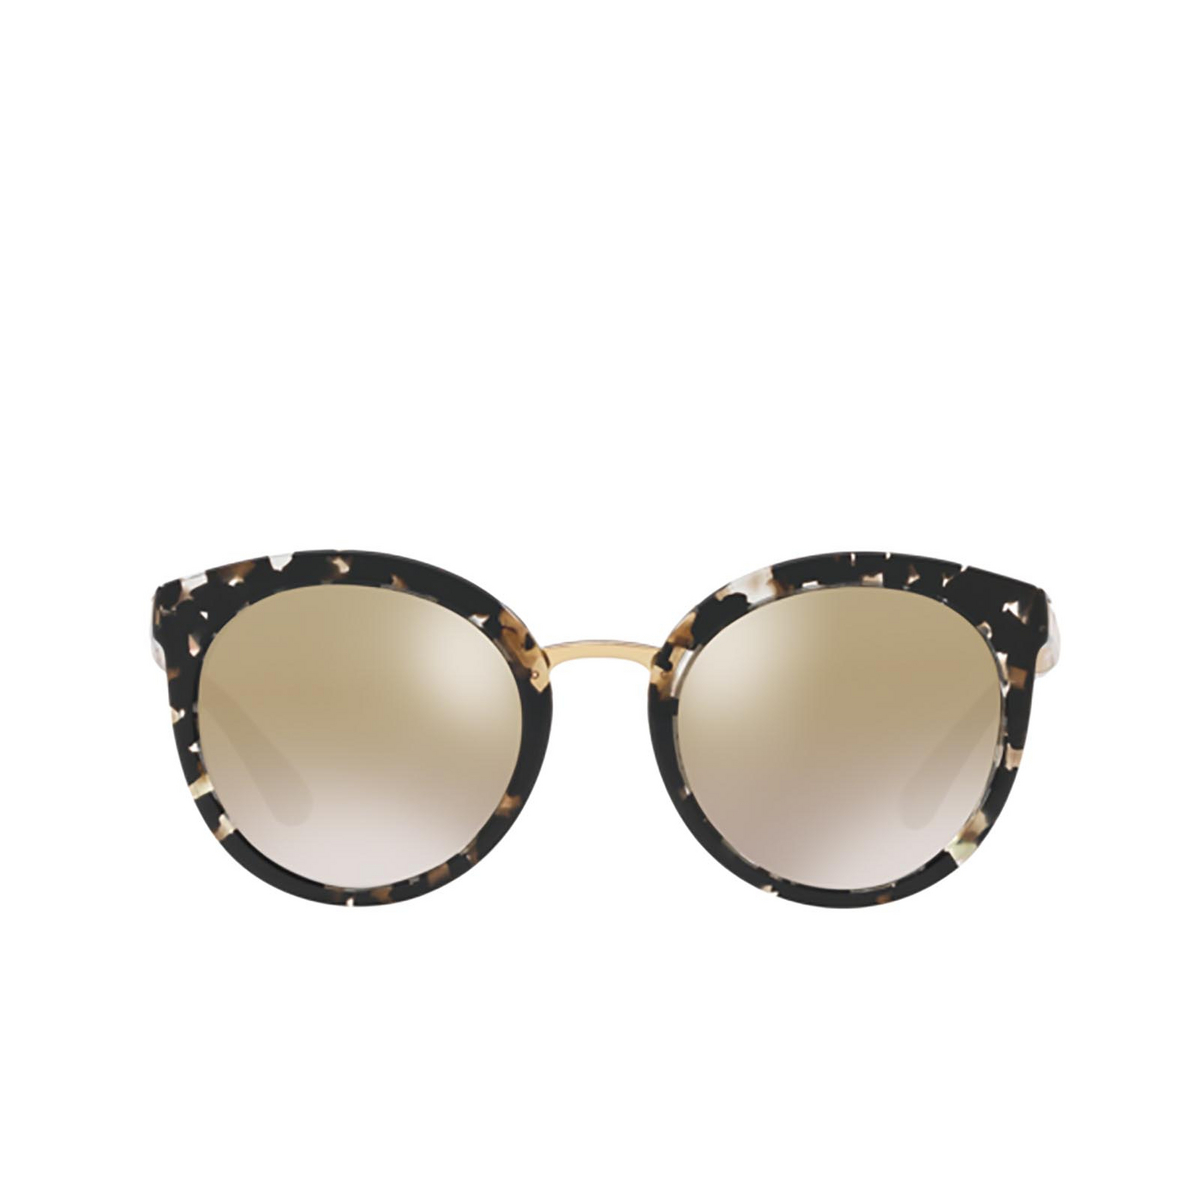 Dolce & Gabbana DG4268 Sunglasses 911/6E CUBE BLACK / GOLD - front view